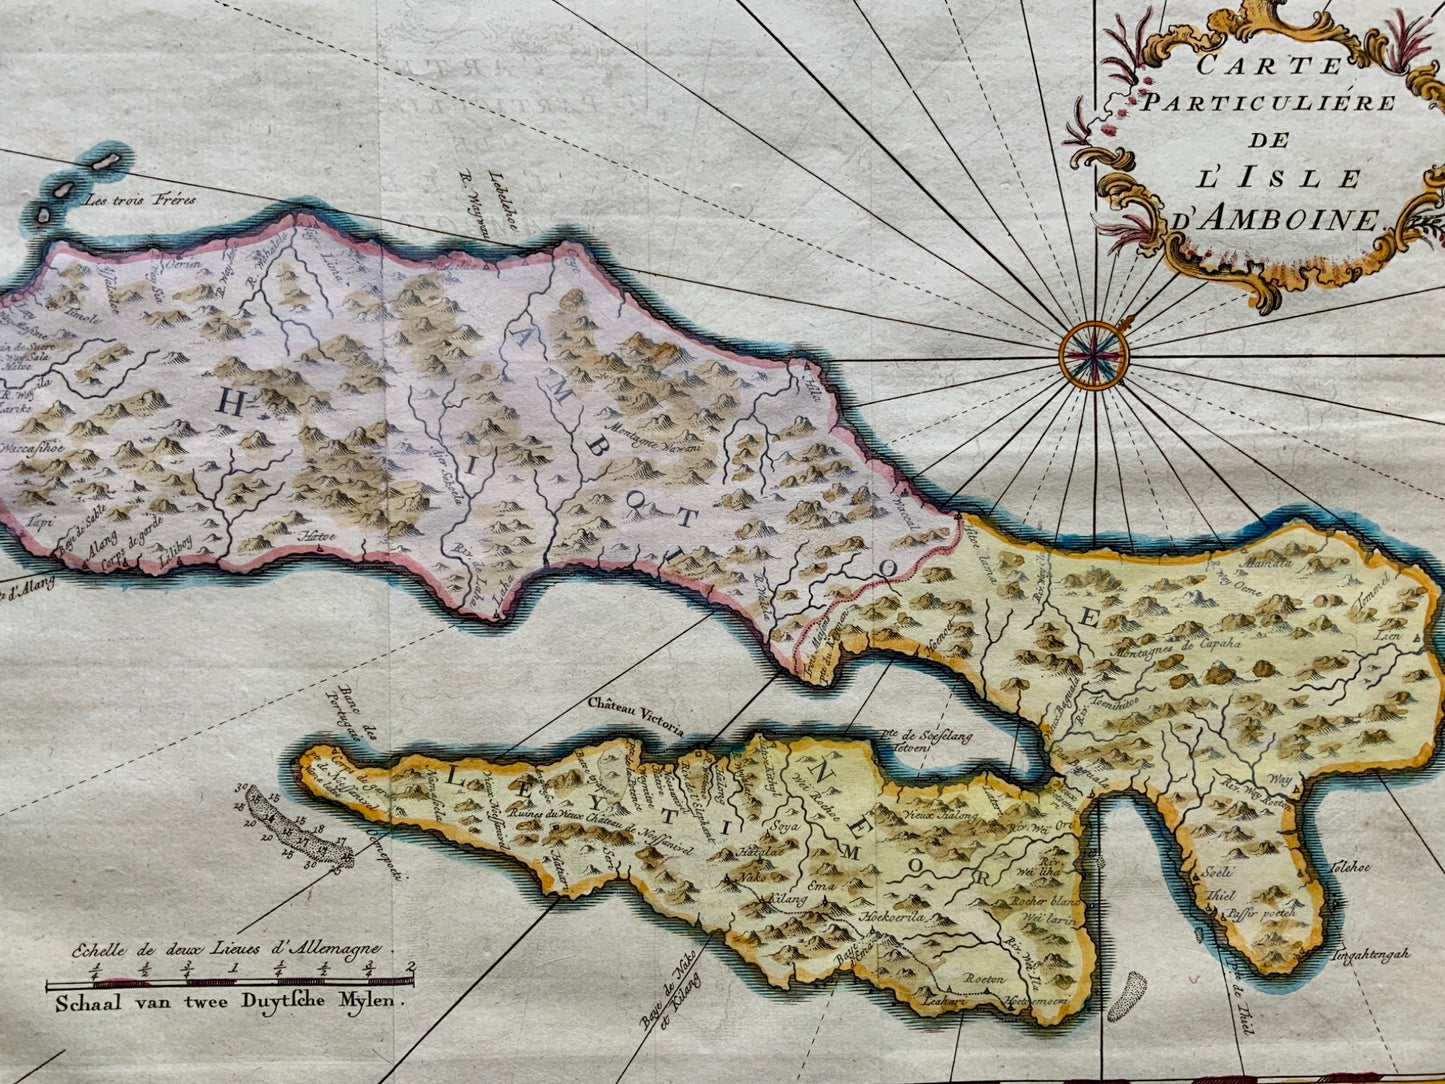 1758 Jakob Schley: Map of Indonesia, Ambon Island, Maluku Islands